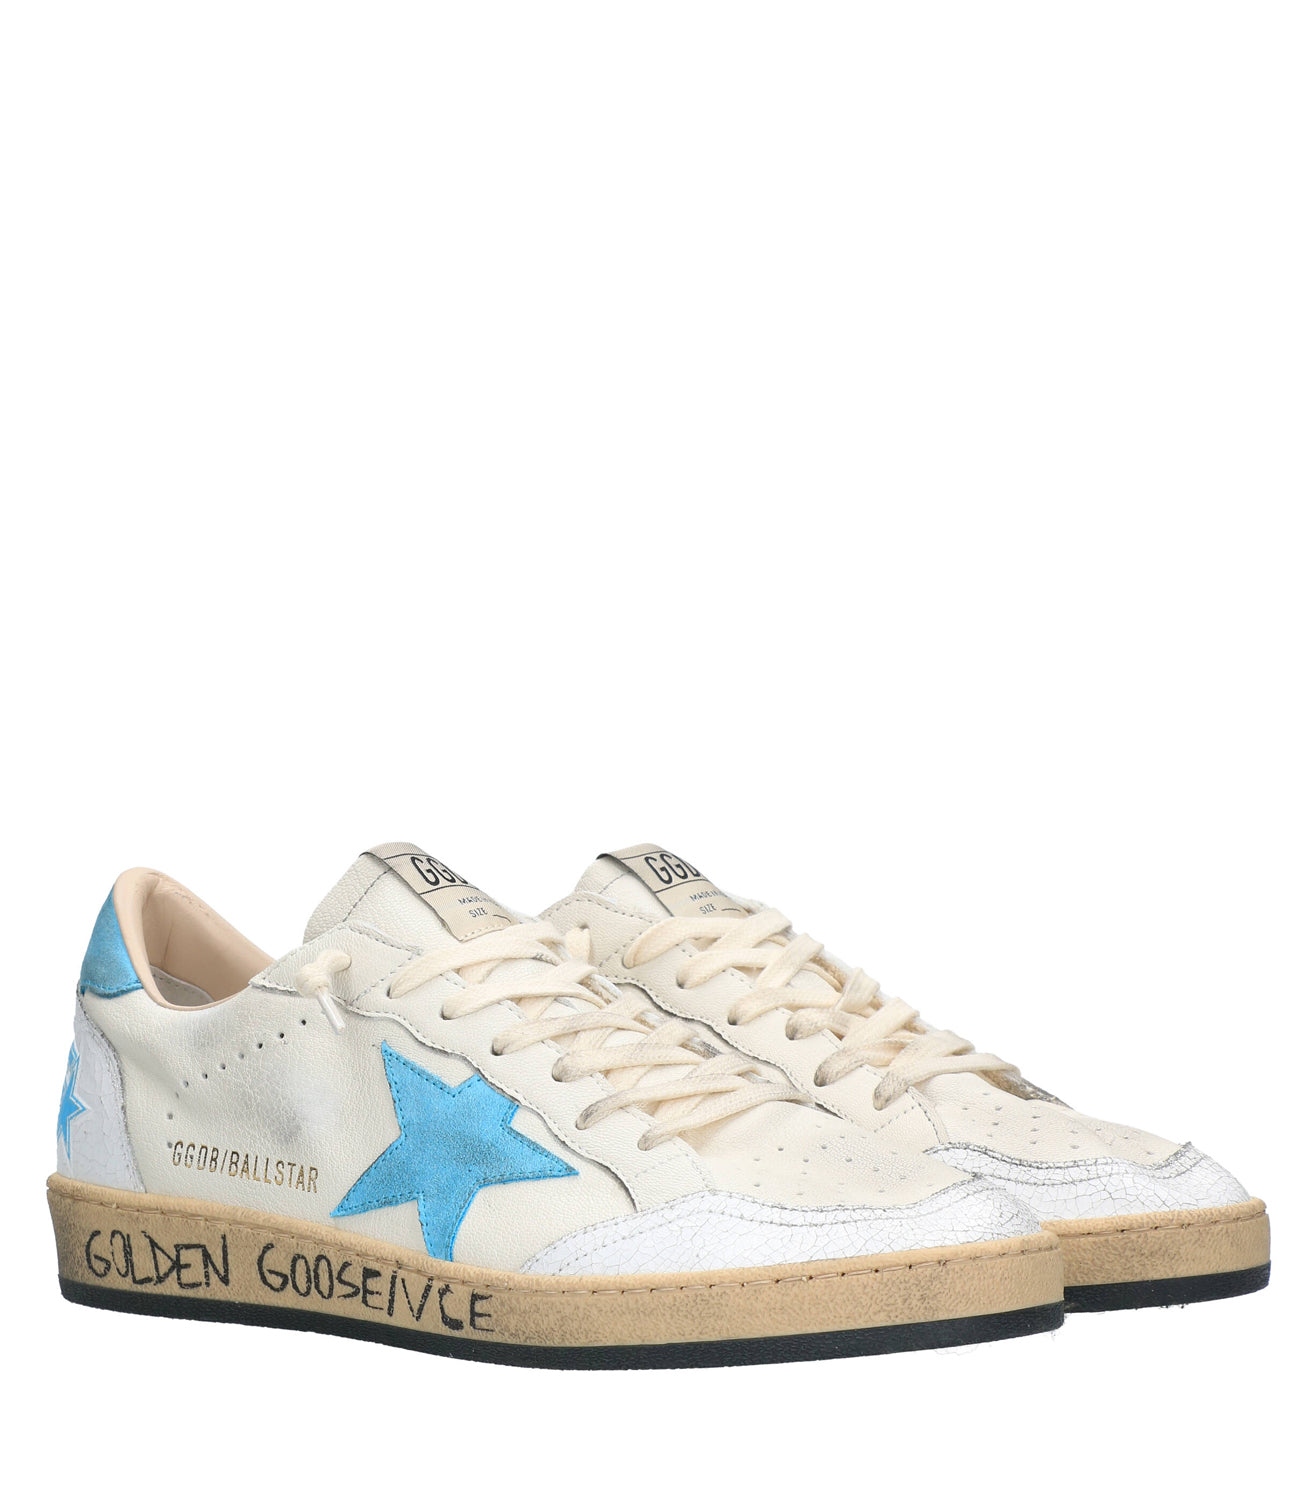 Golden Goose | Ball Star Sneakers White and Light Blue